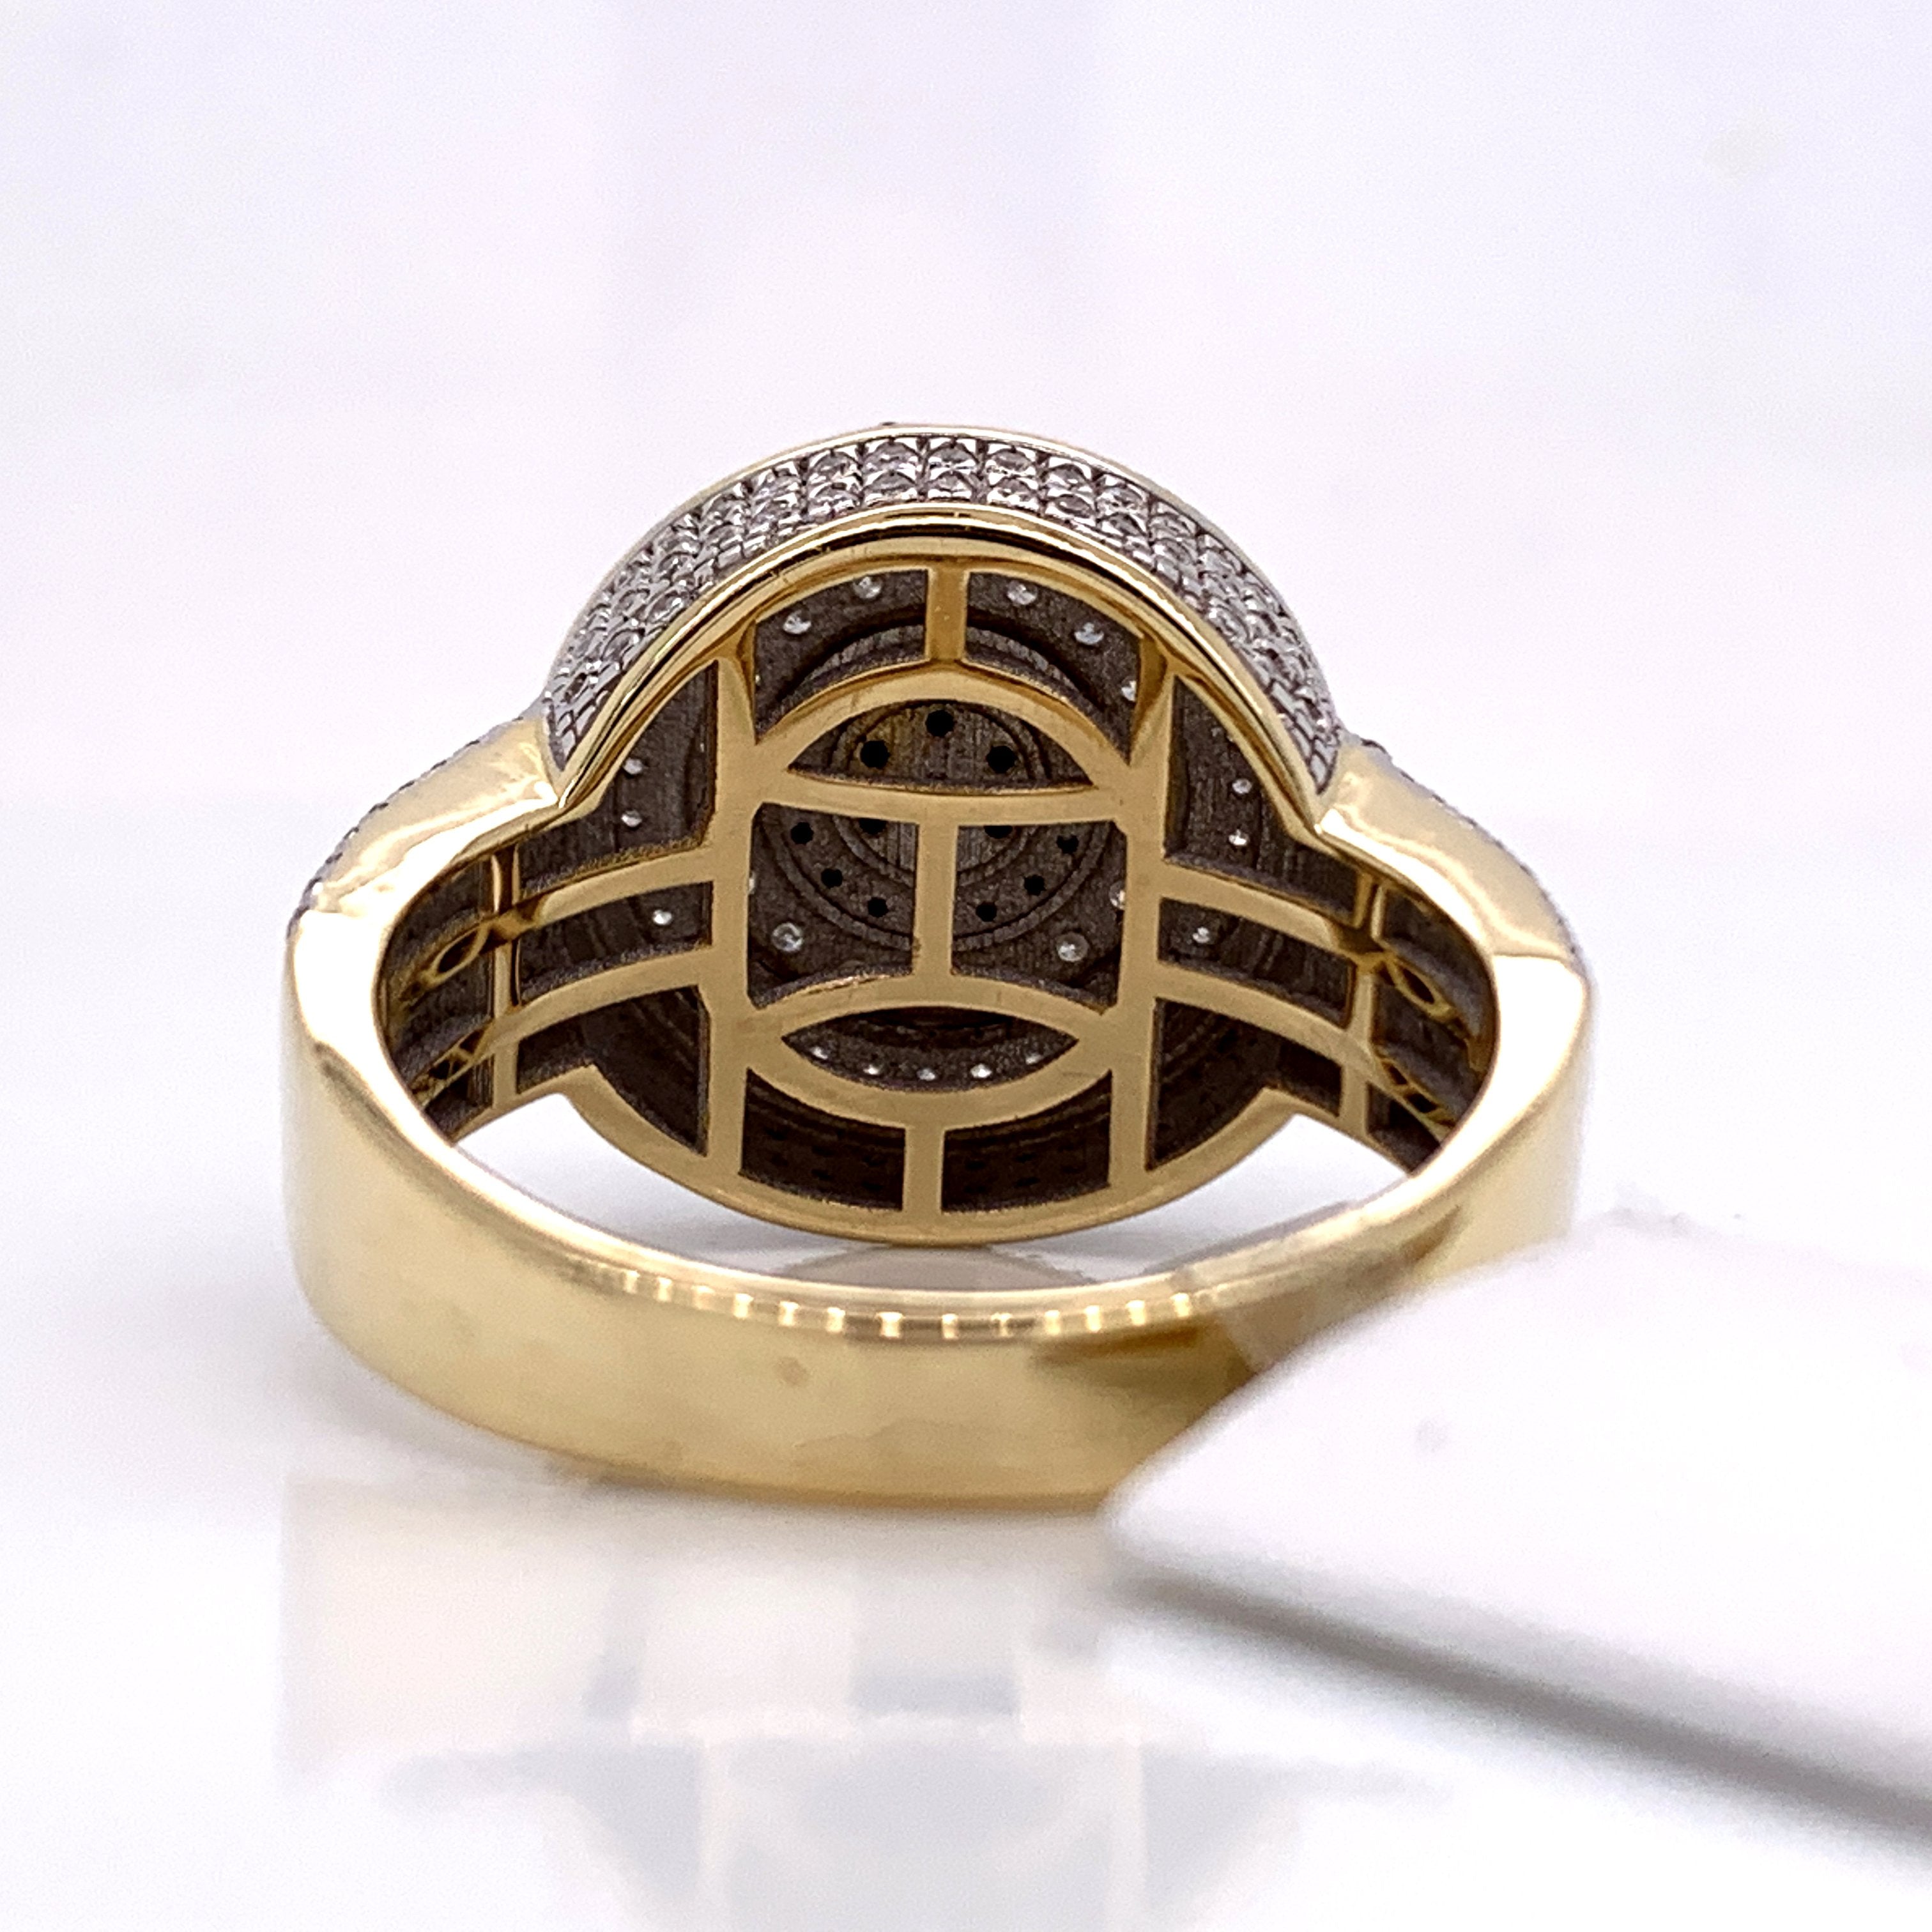 1.63 CT. Diamond Ring in 10K Gold - White Carat Diamonds 